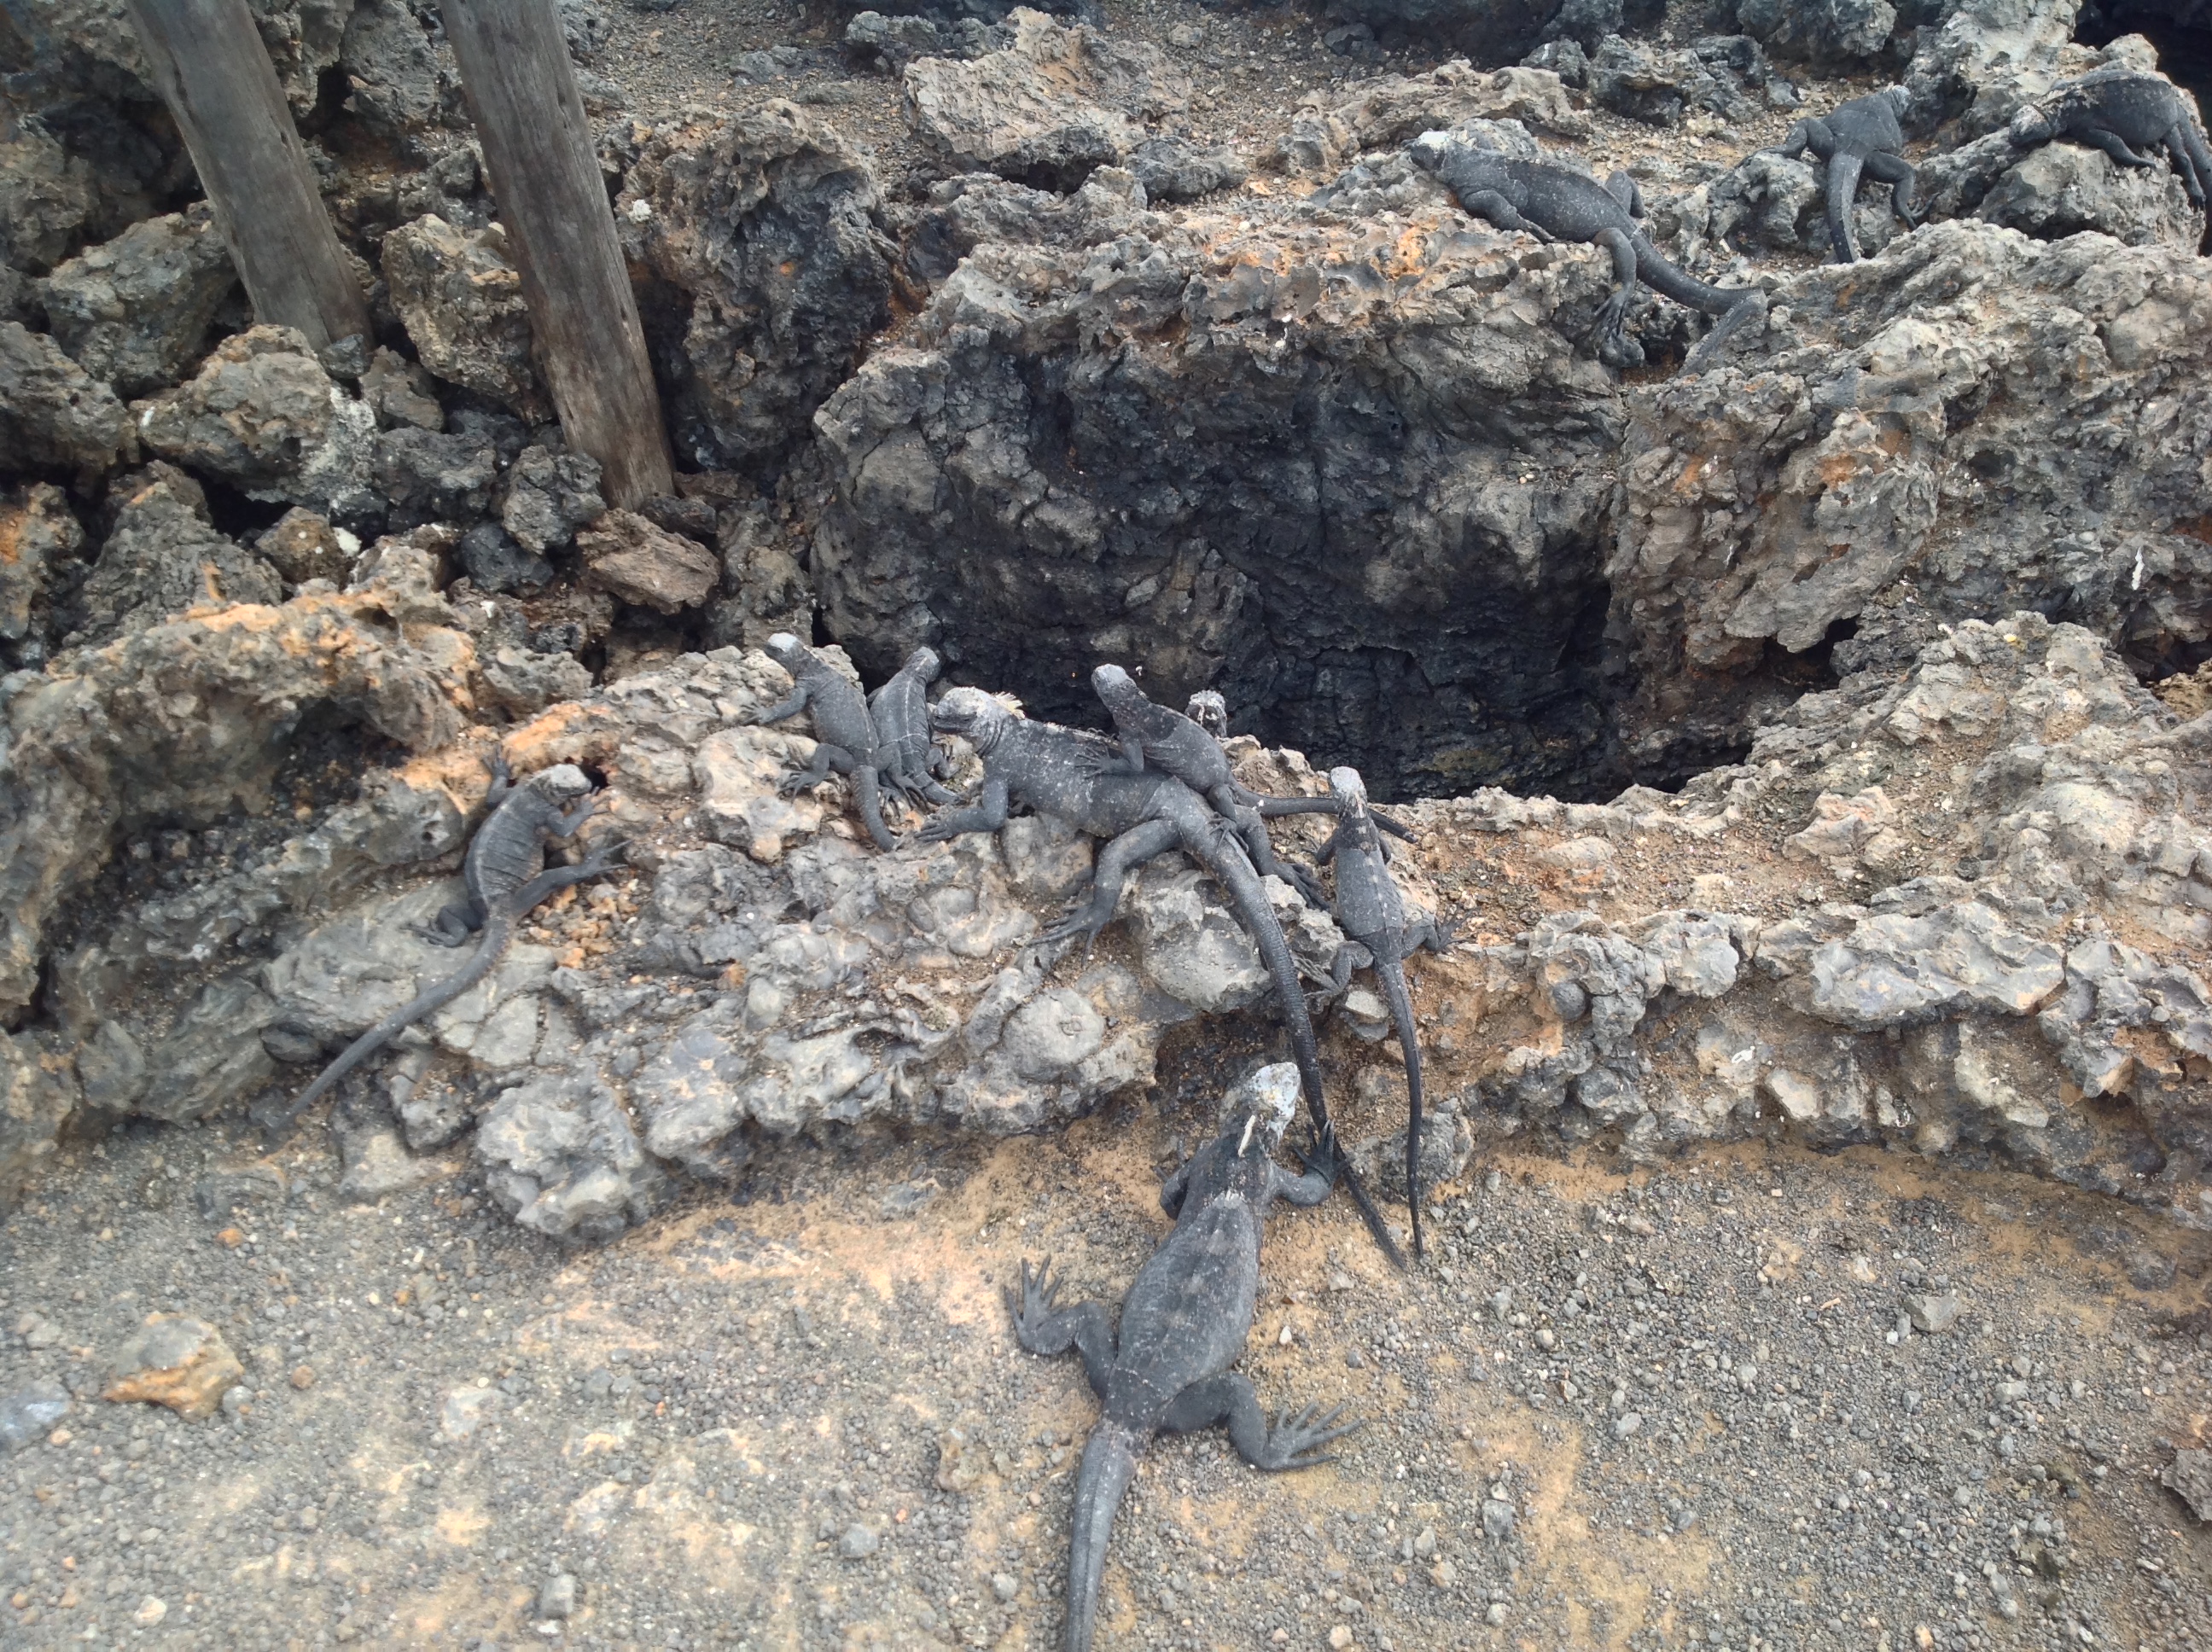 A few skittish juvenile marine iguanas hanging out near the trail. 